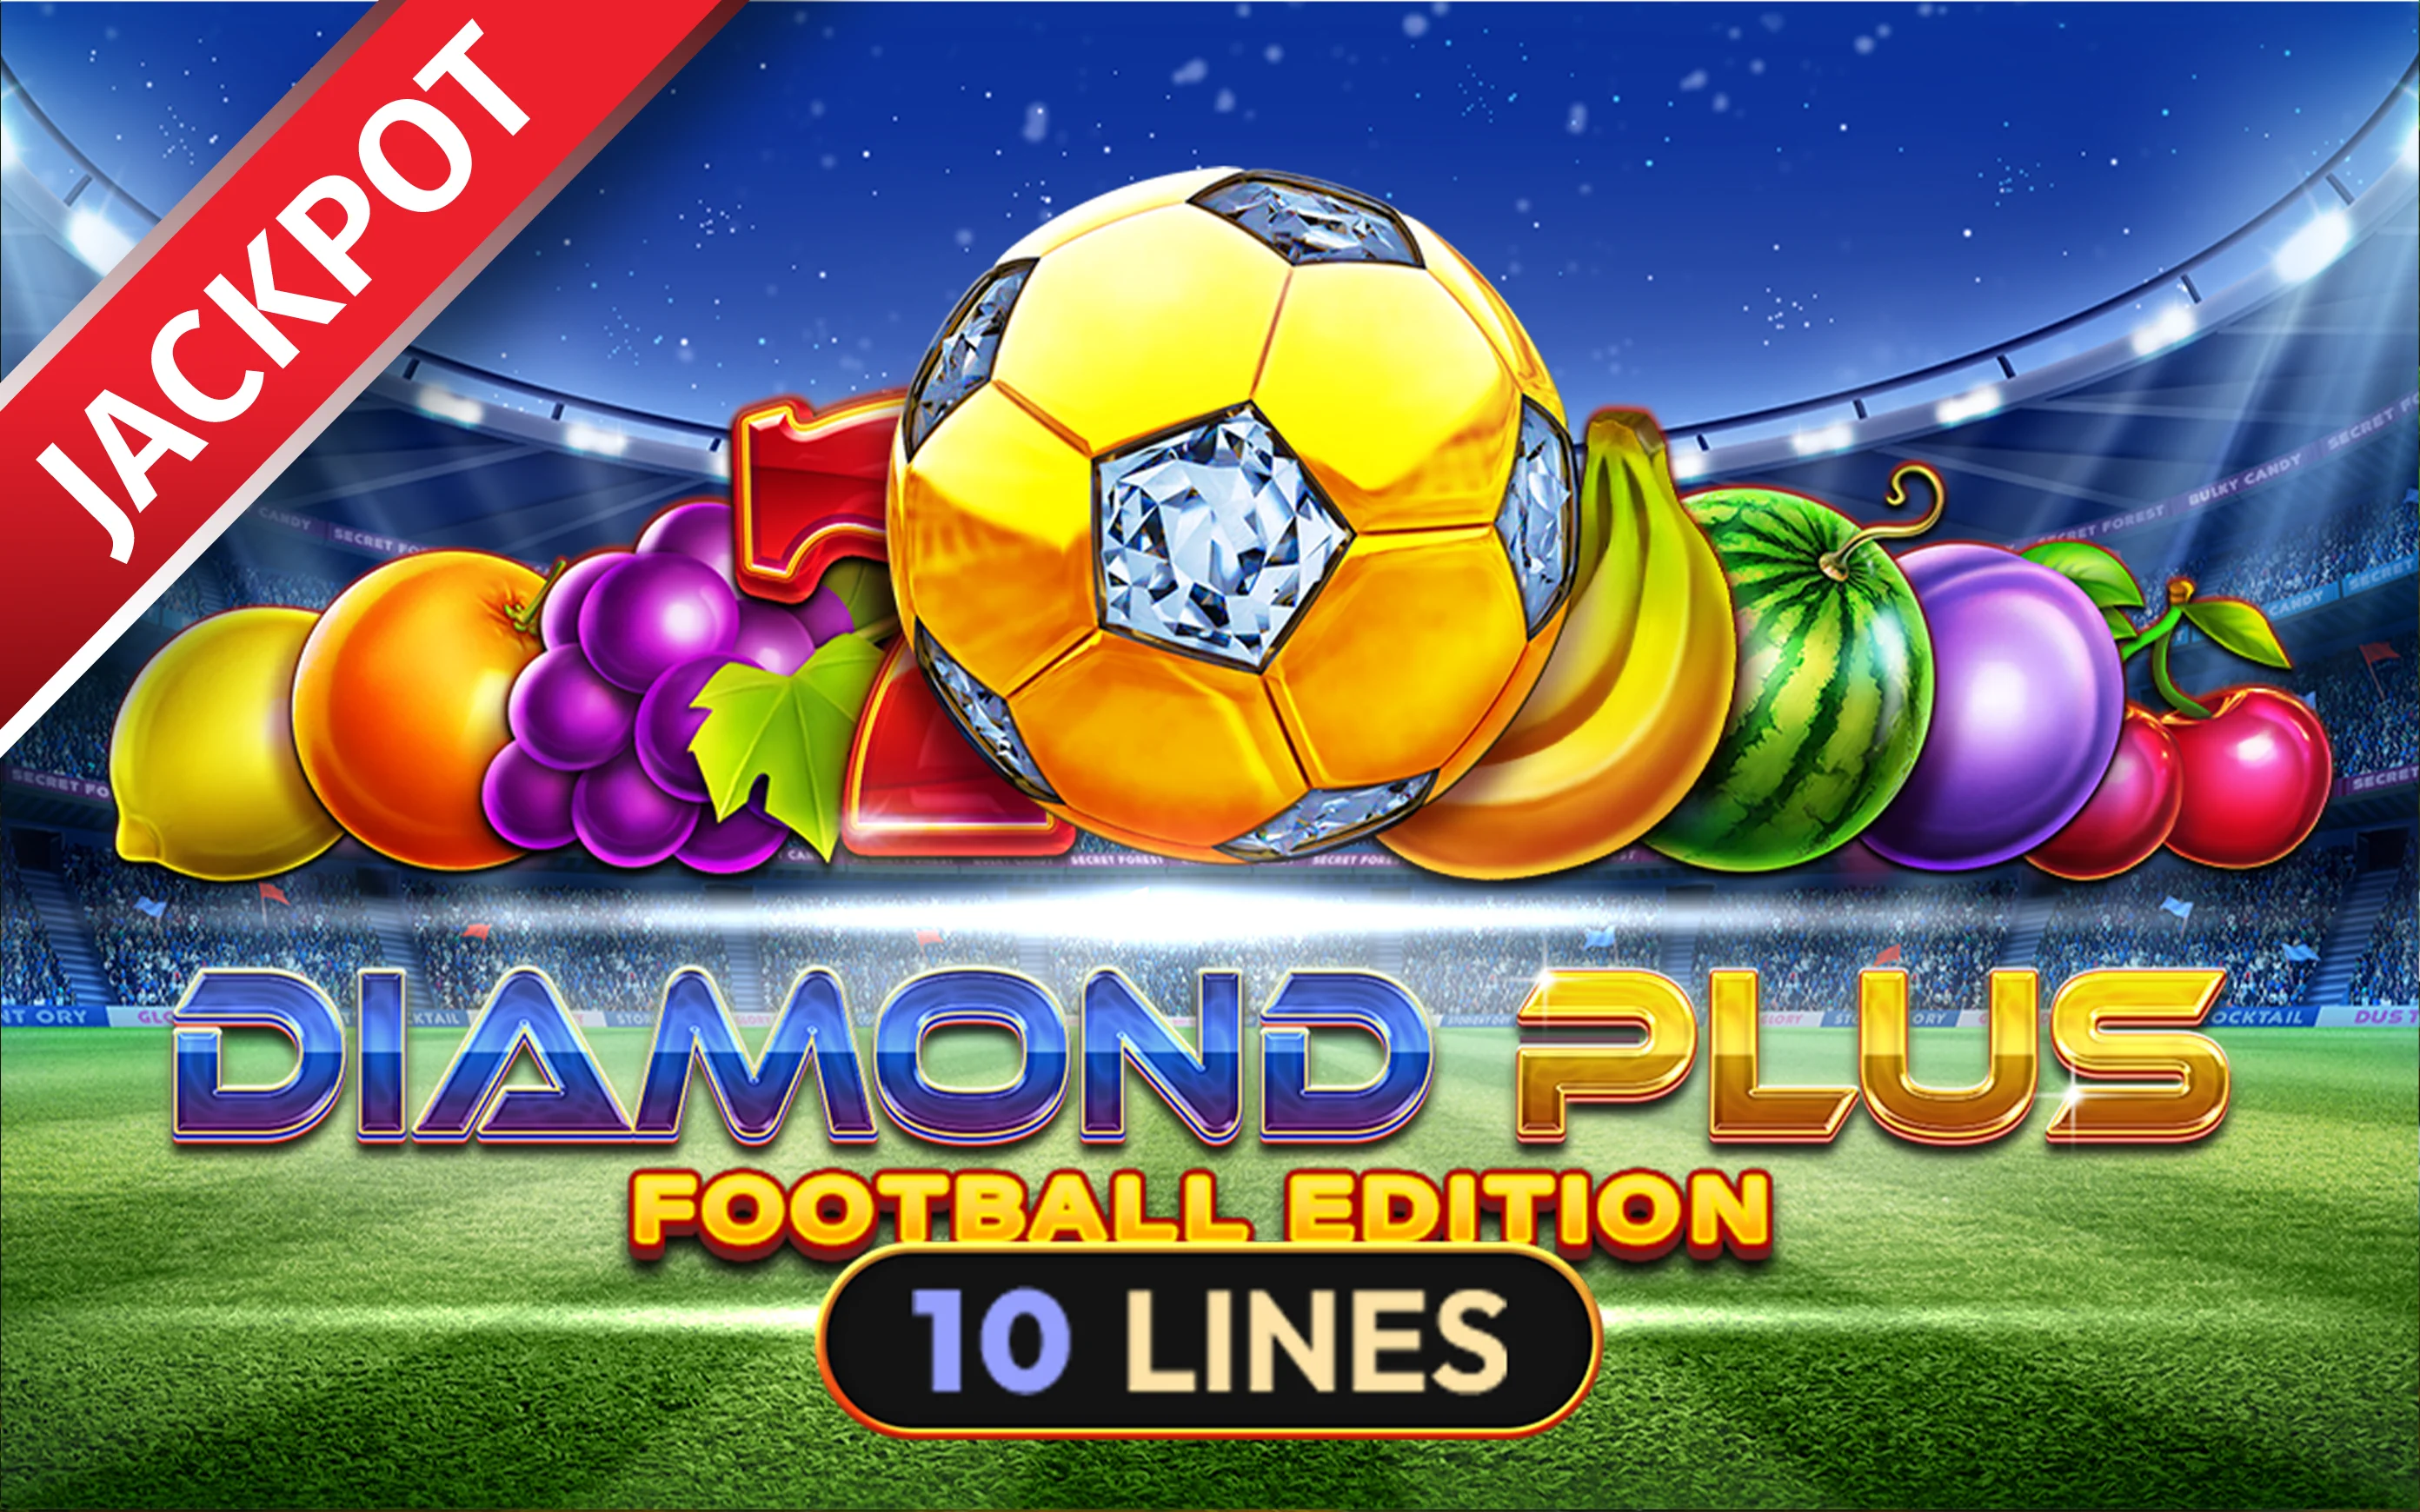 Starcasino.be online casino üzerinden Diamond Plus Football Edition oynayın